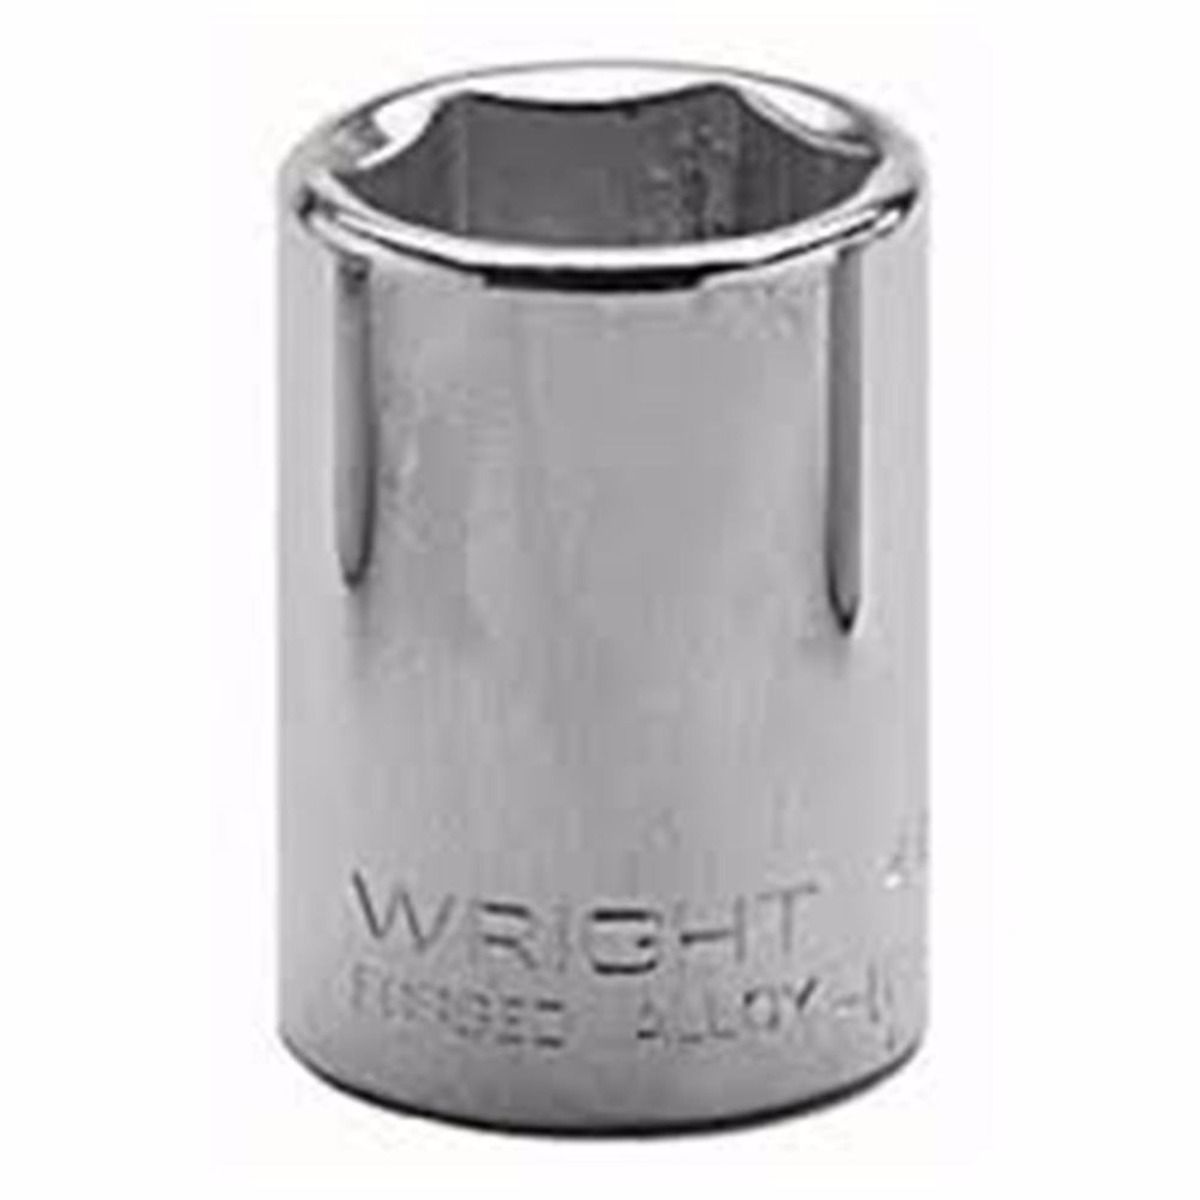 5/16 Wright Tool 3110 3/8 Drive 12 Point Standard Socket